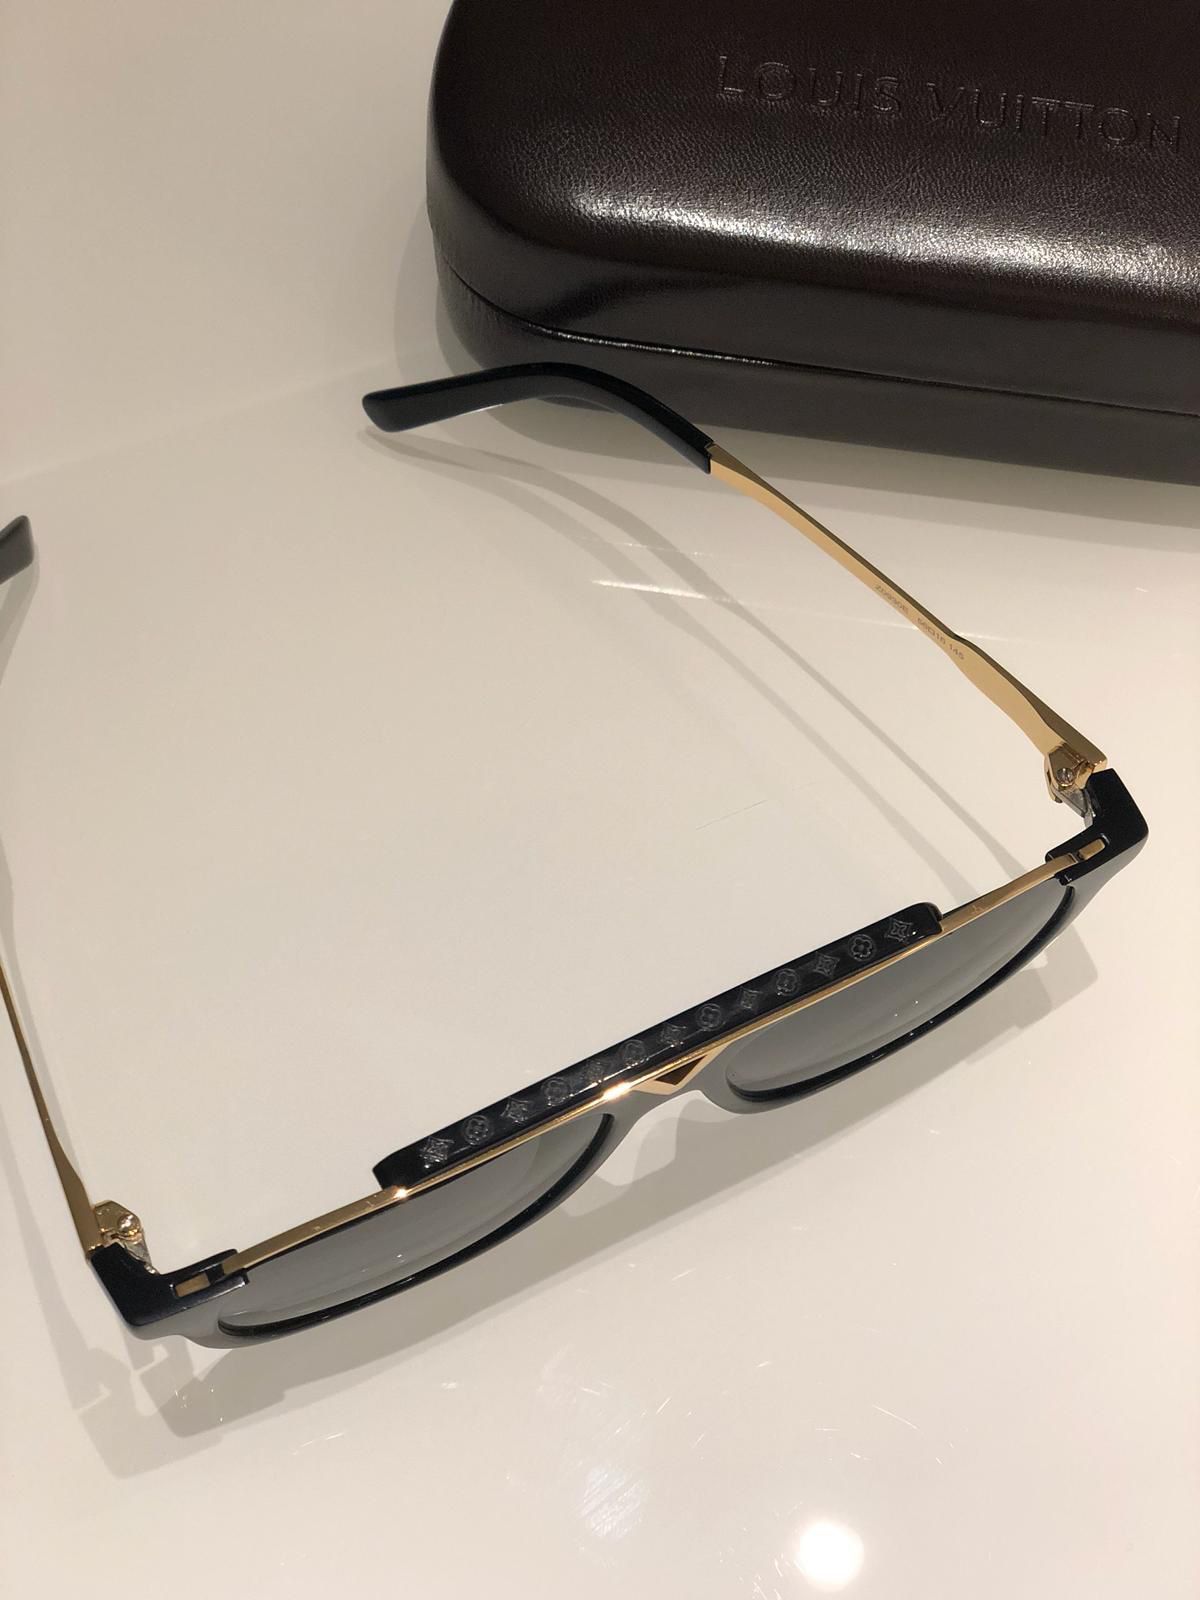 Louis Vuitton – Mascot Sunglasses｜TikTok Search